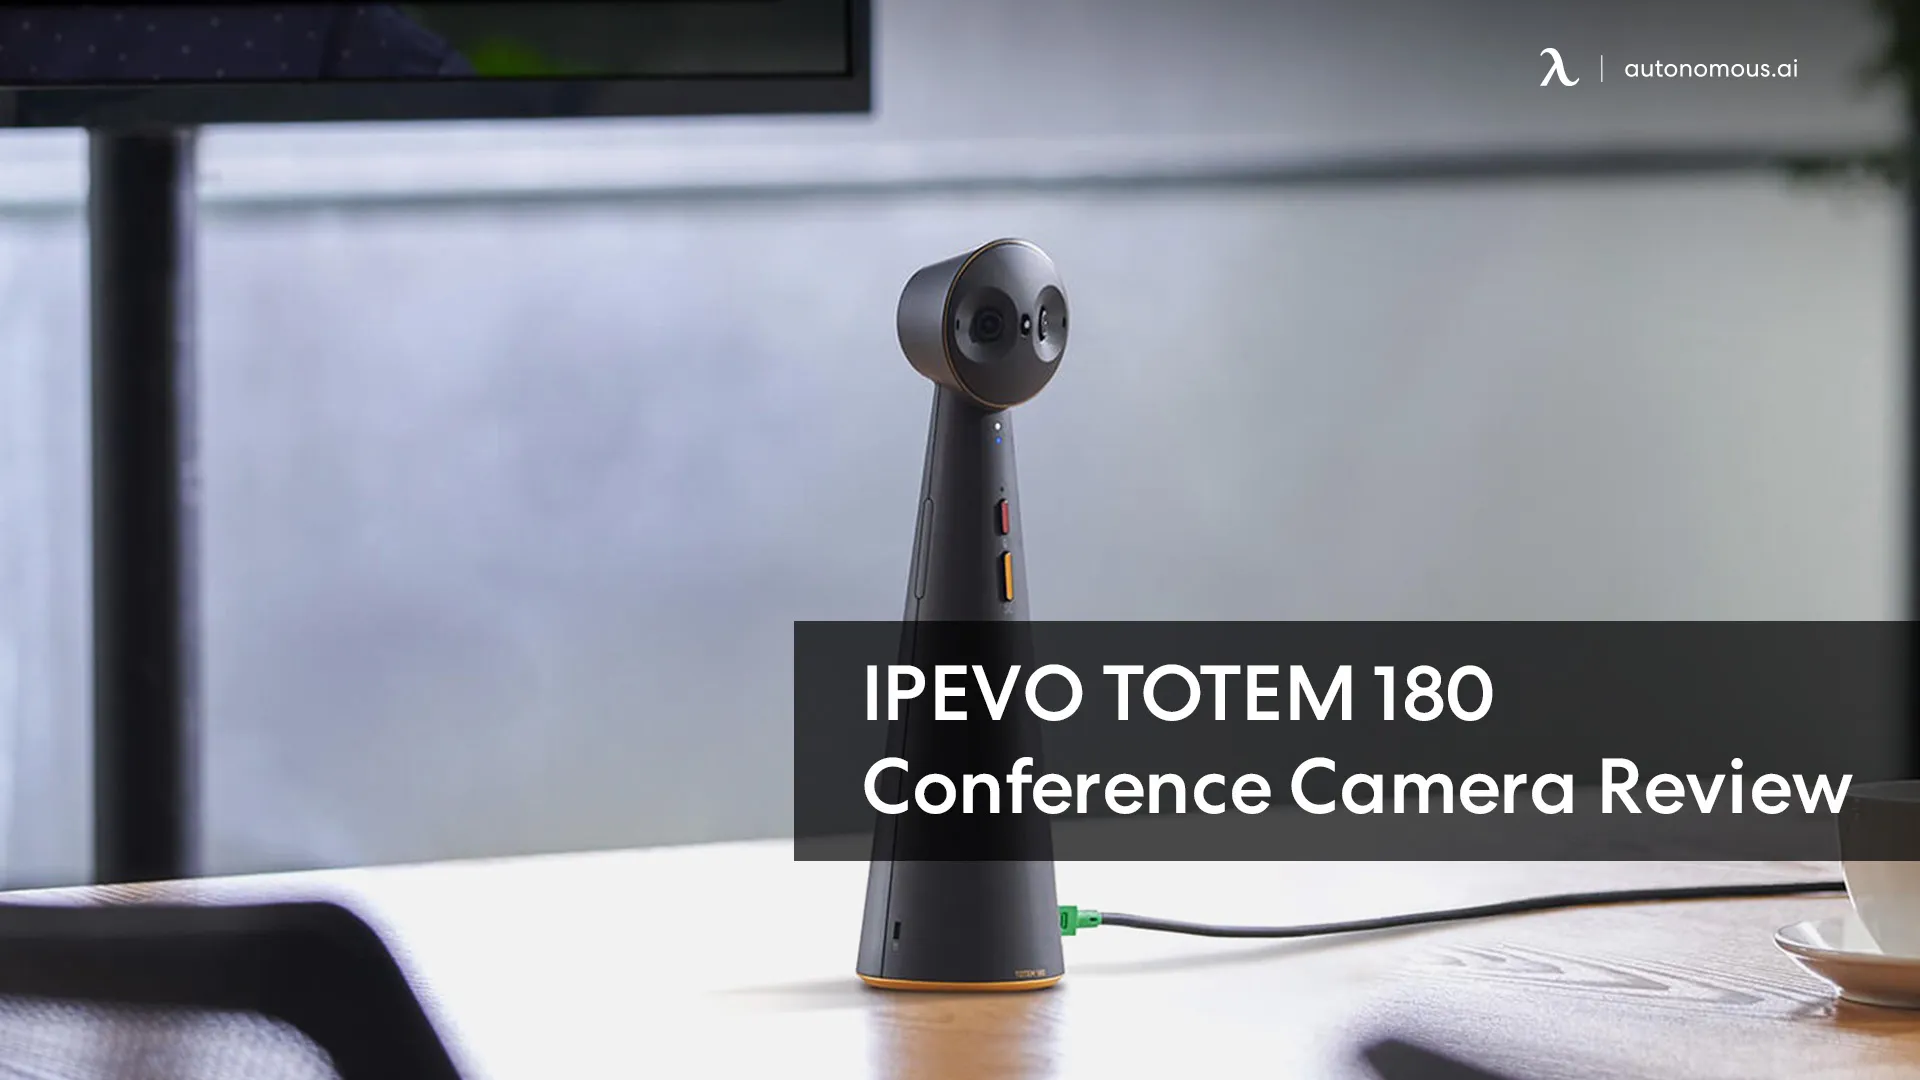 IPEVO TOTEM Panoramic Conference Camera Review